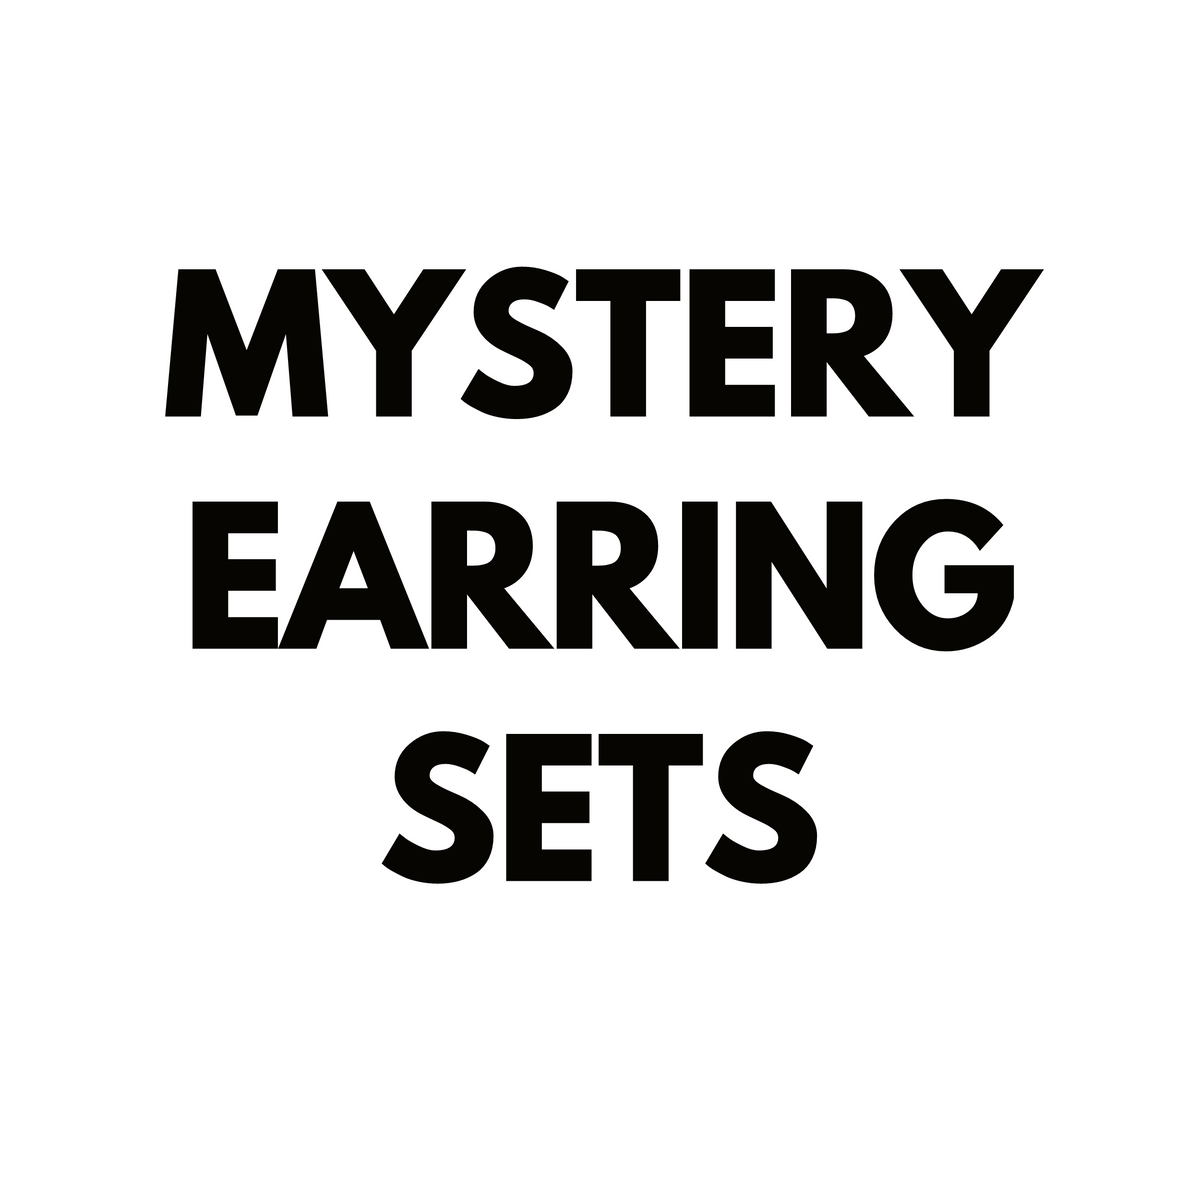 MYSTERY EARRING SETS